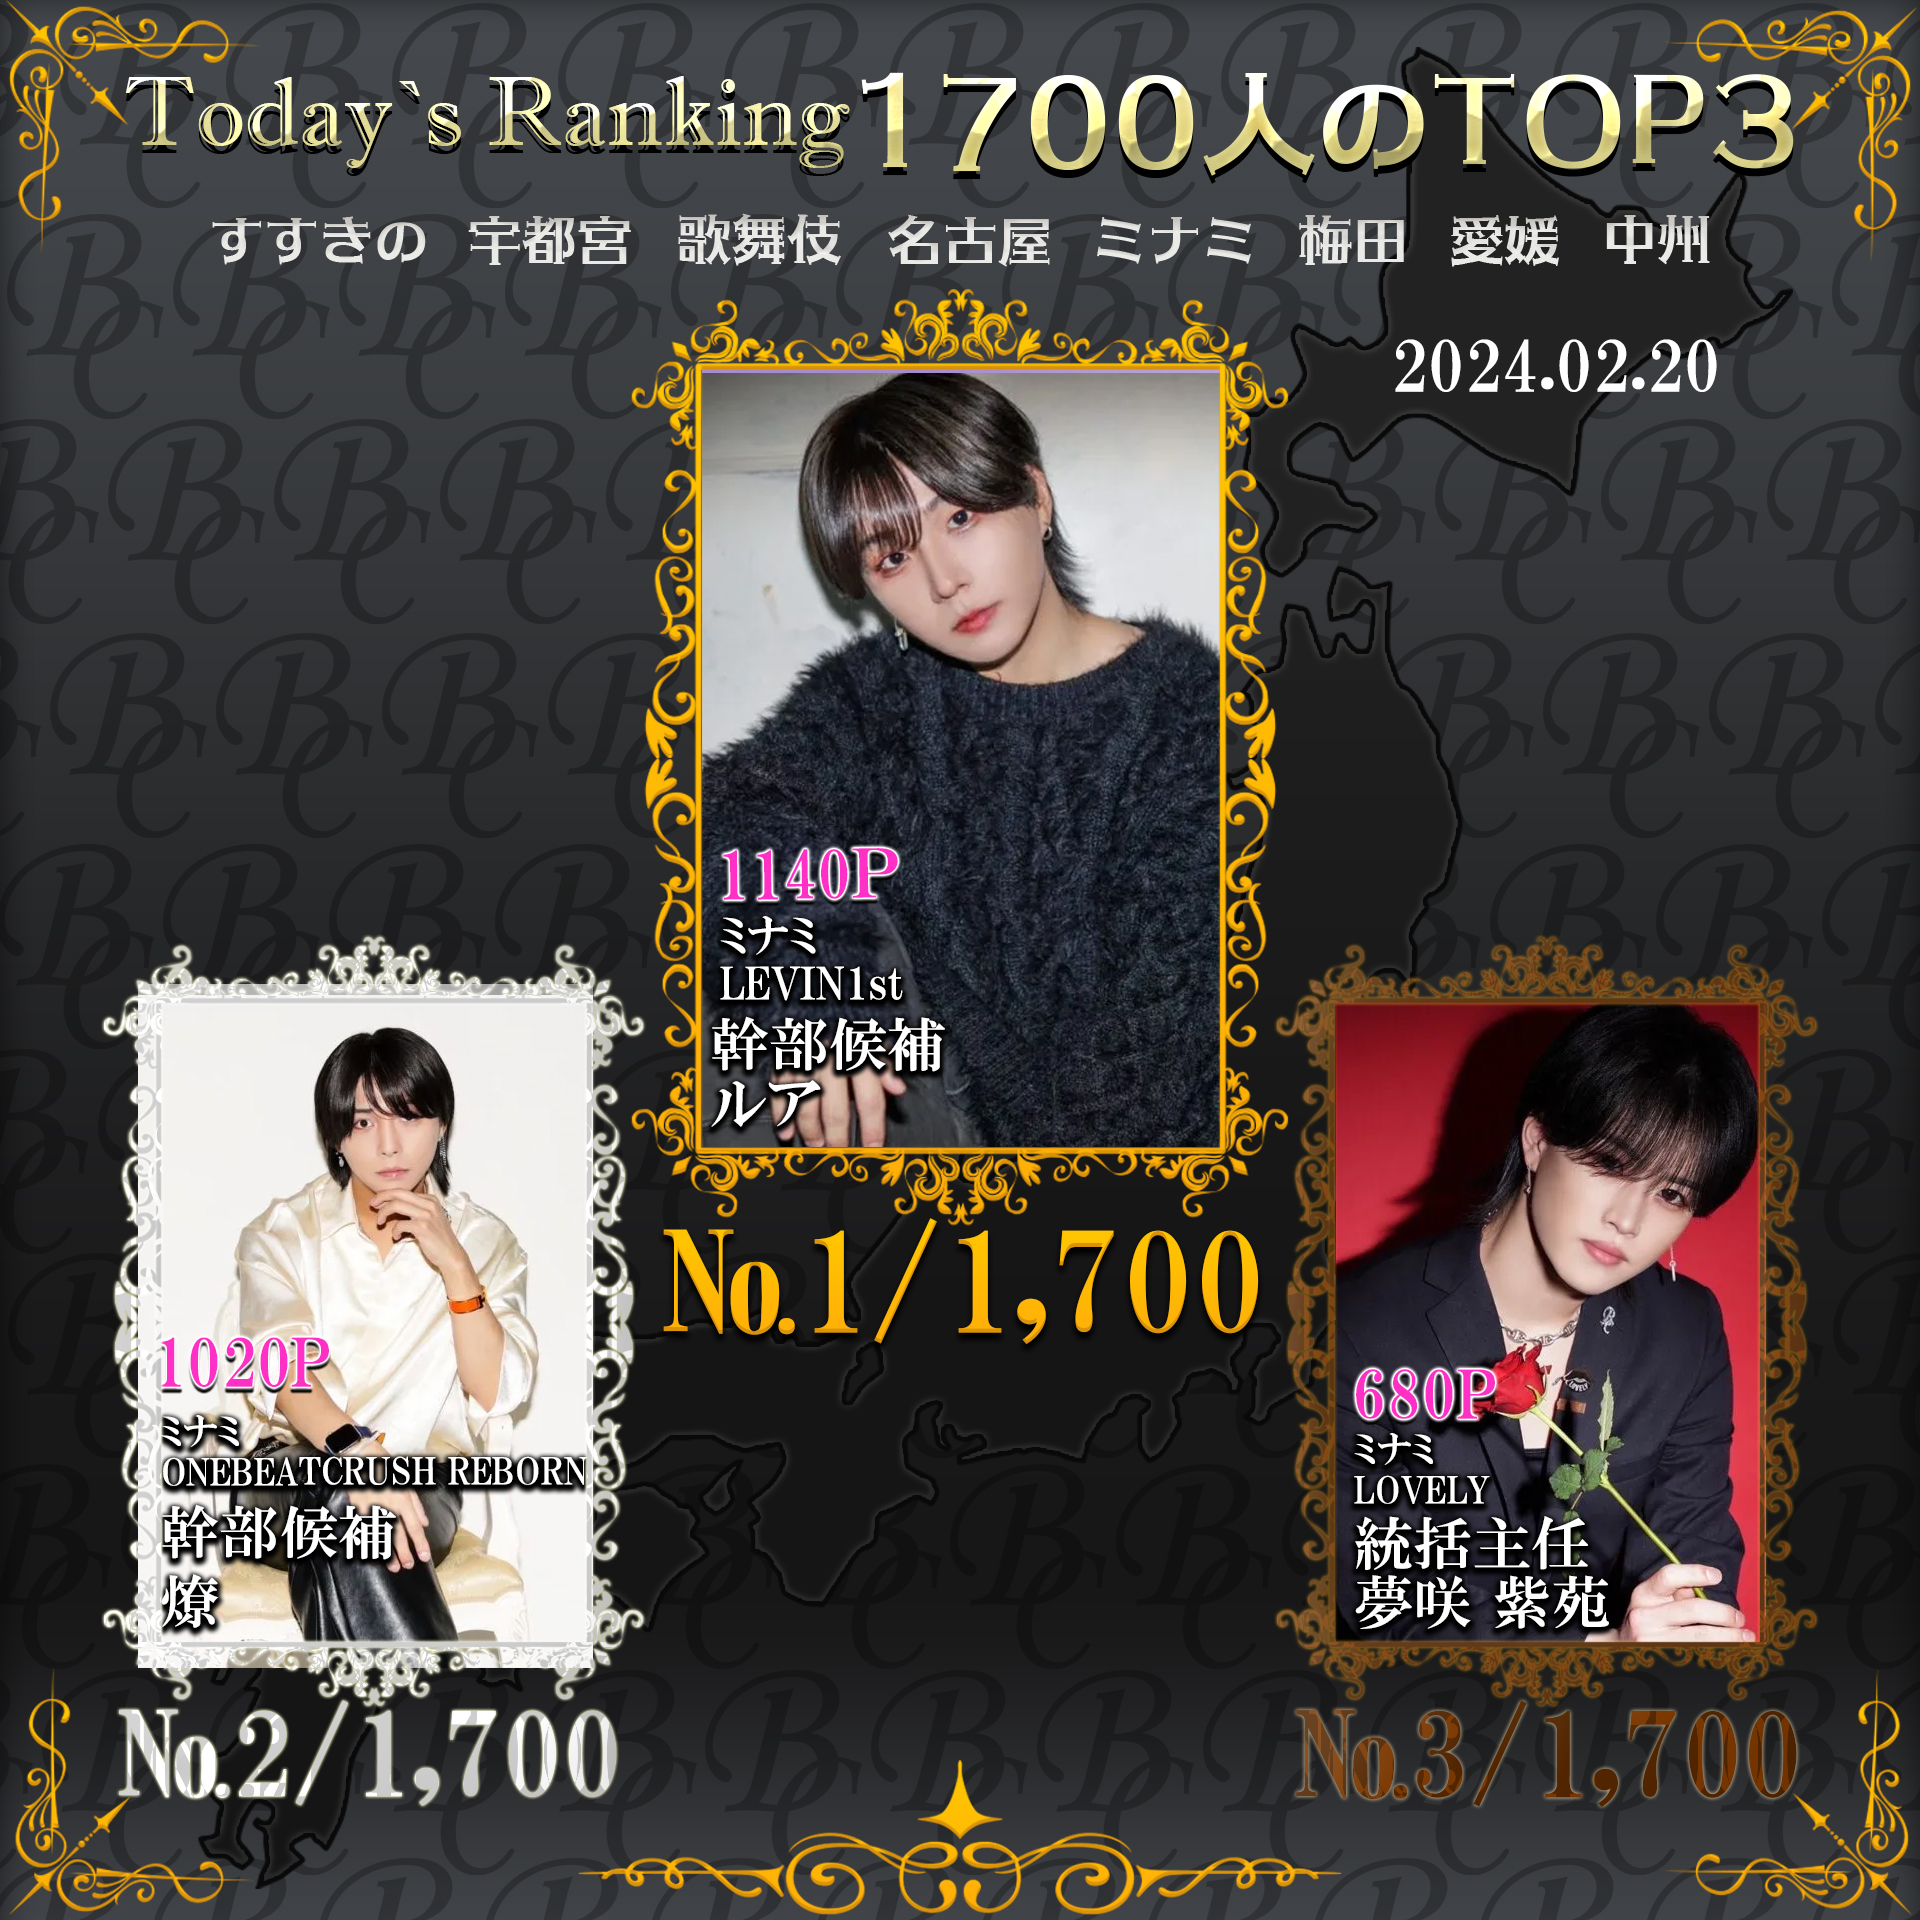 2/20 Today’s Ranking